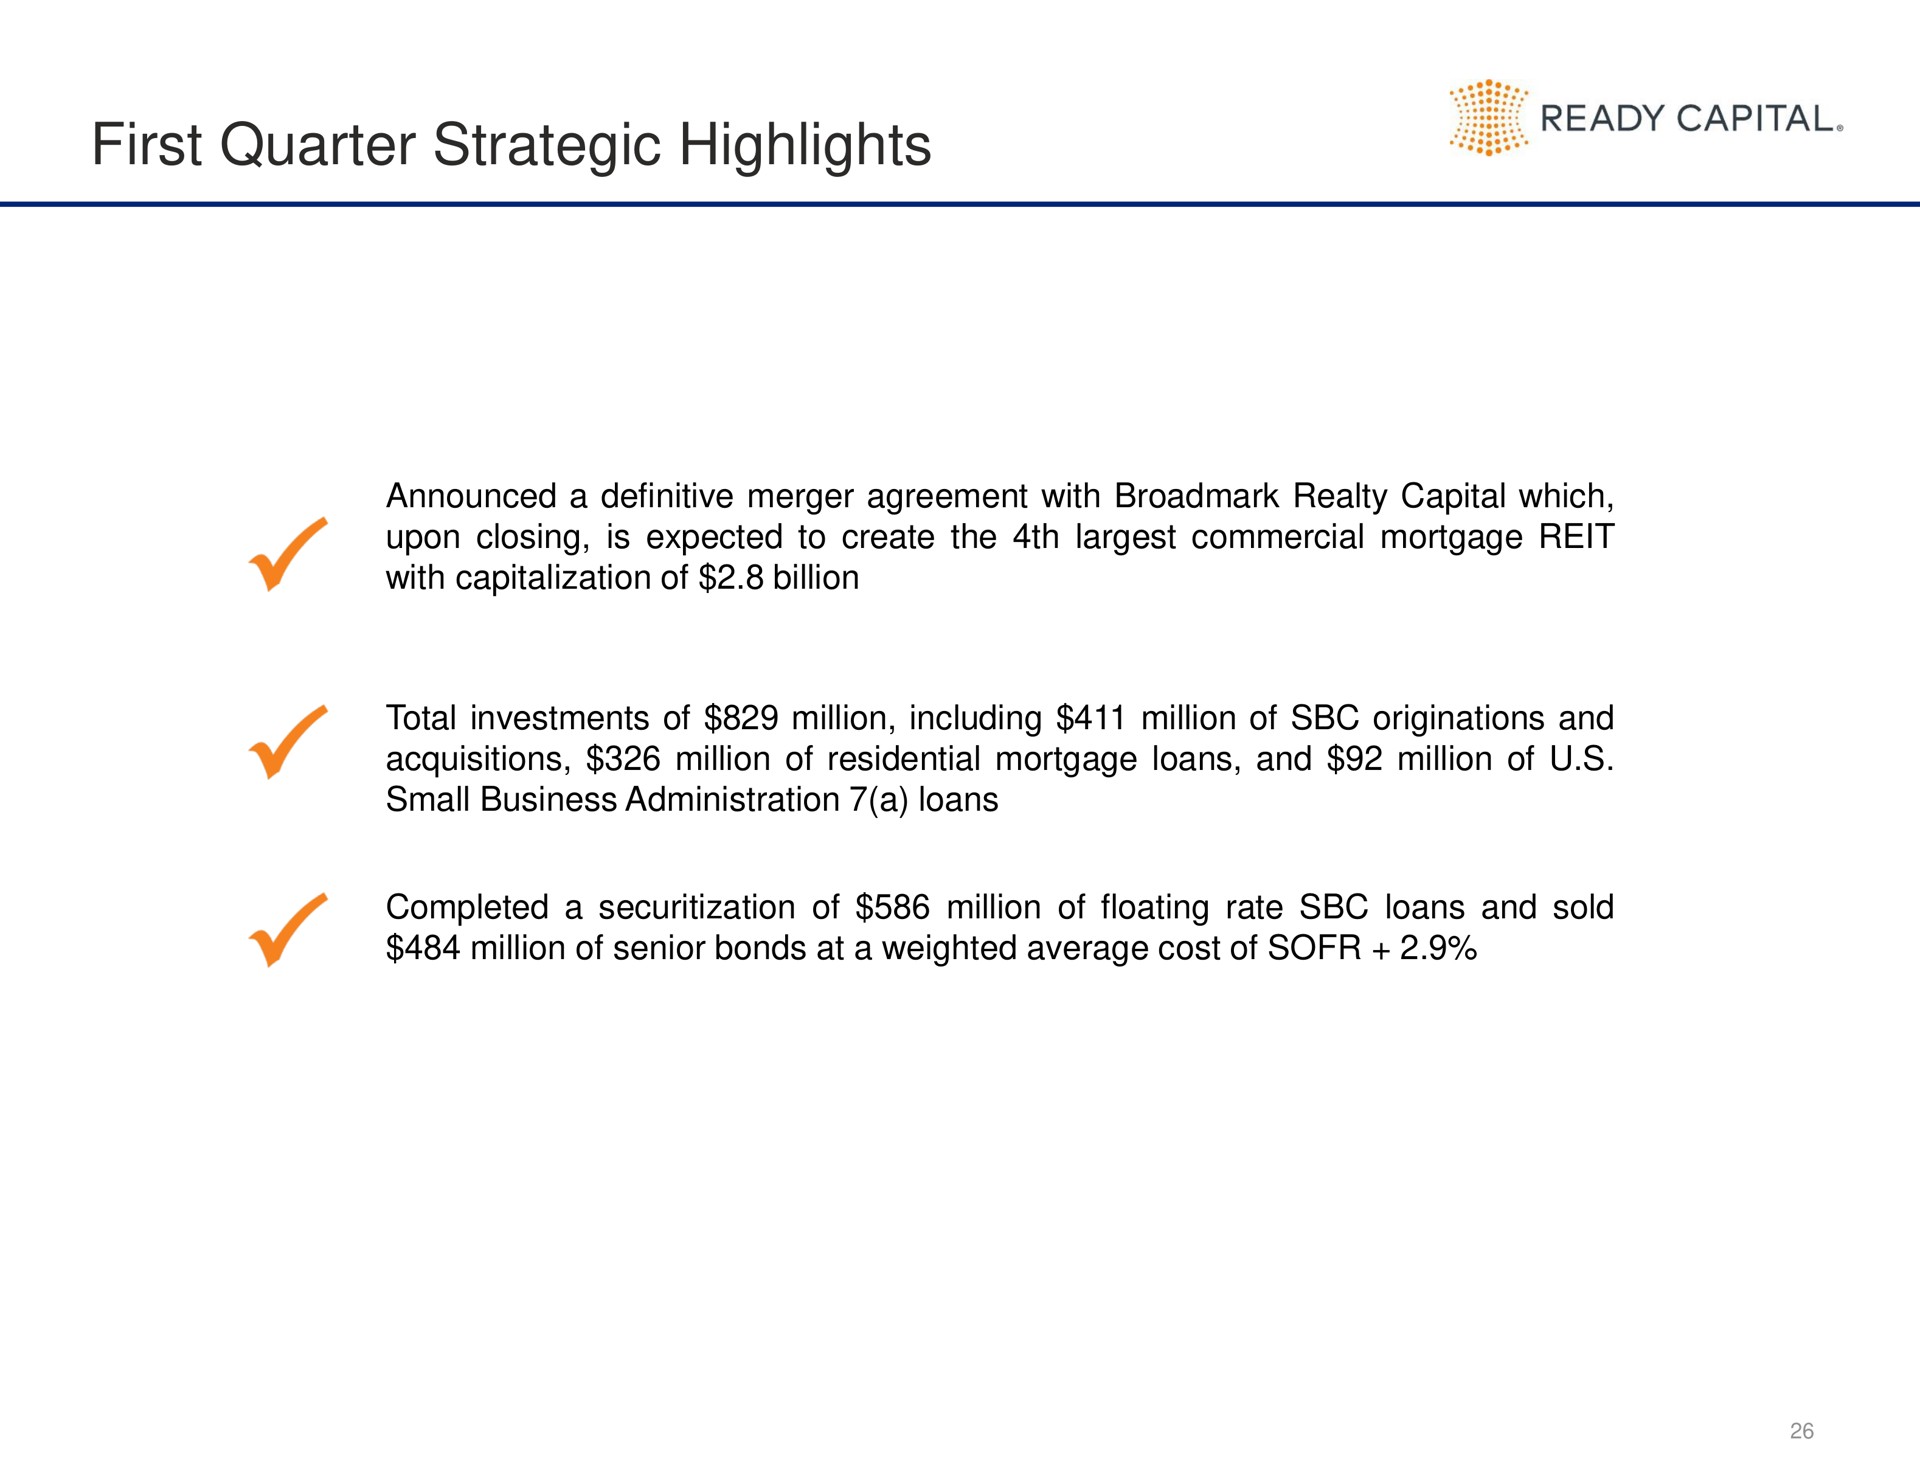 first quarter strategic highlights ready capital | Ready Capital